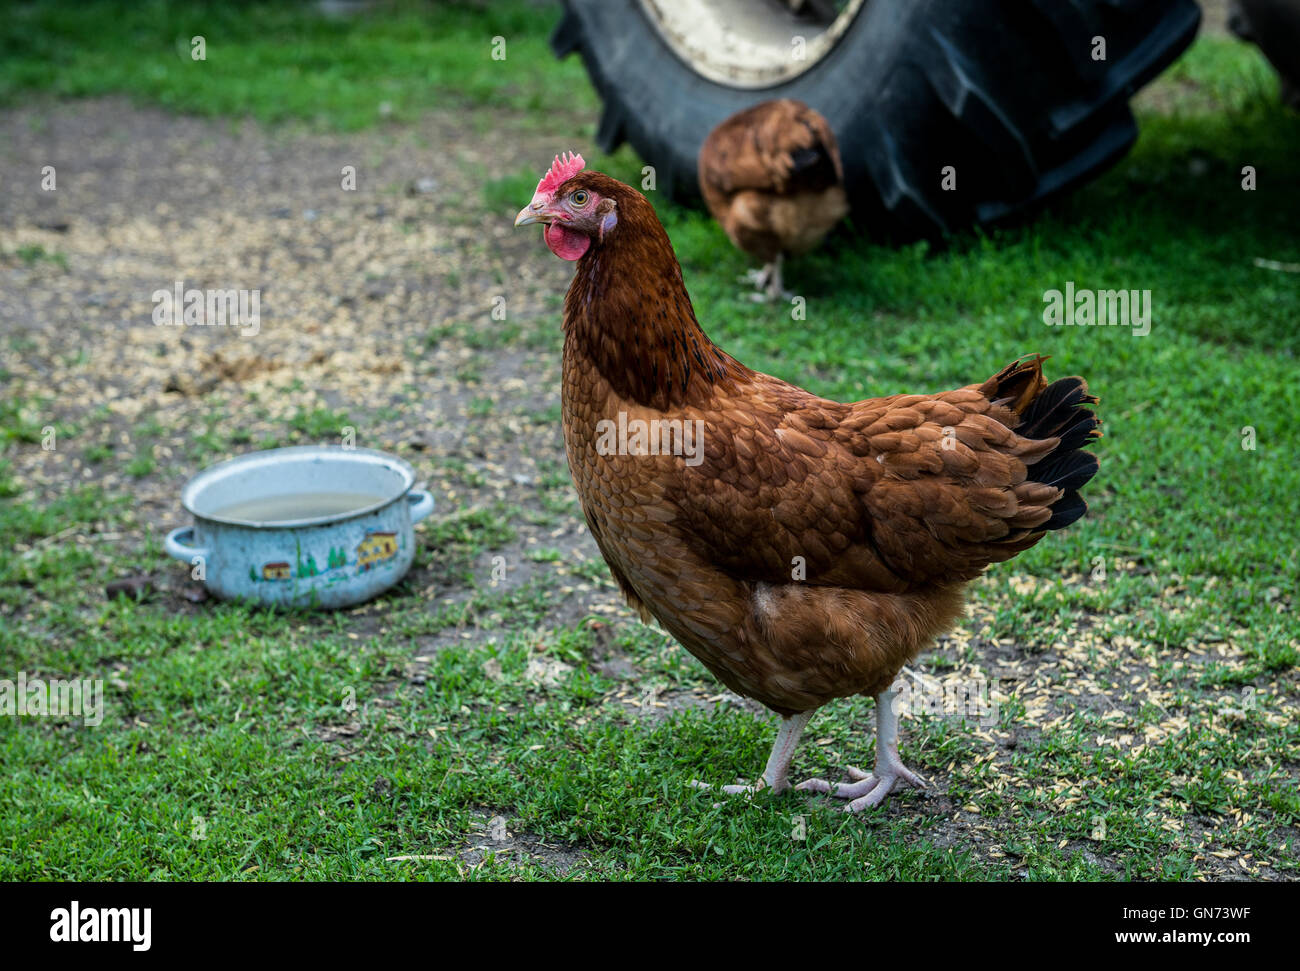 hen on a free range chicken farm in a village in Poland Stock Photo